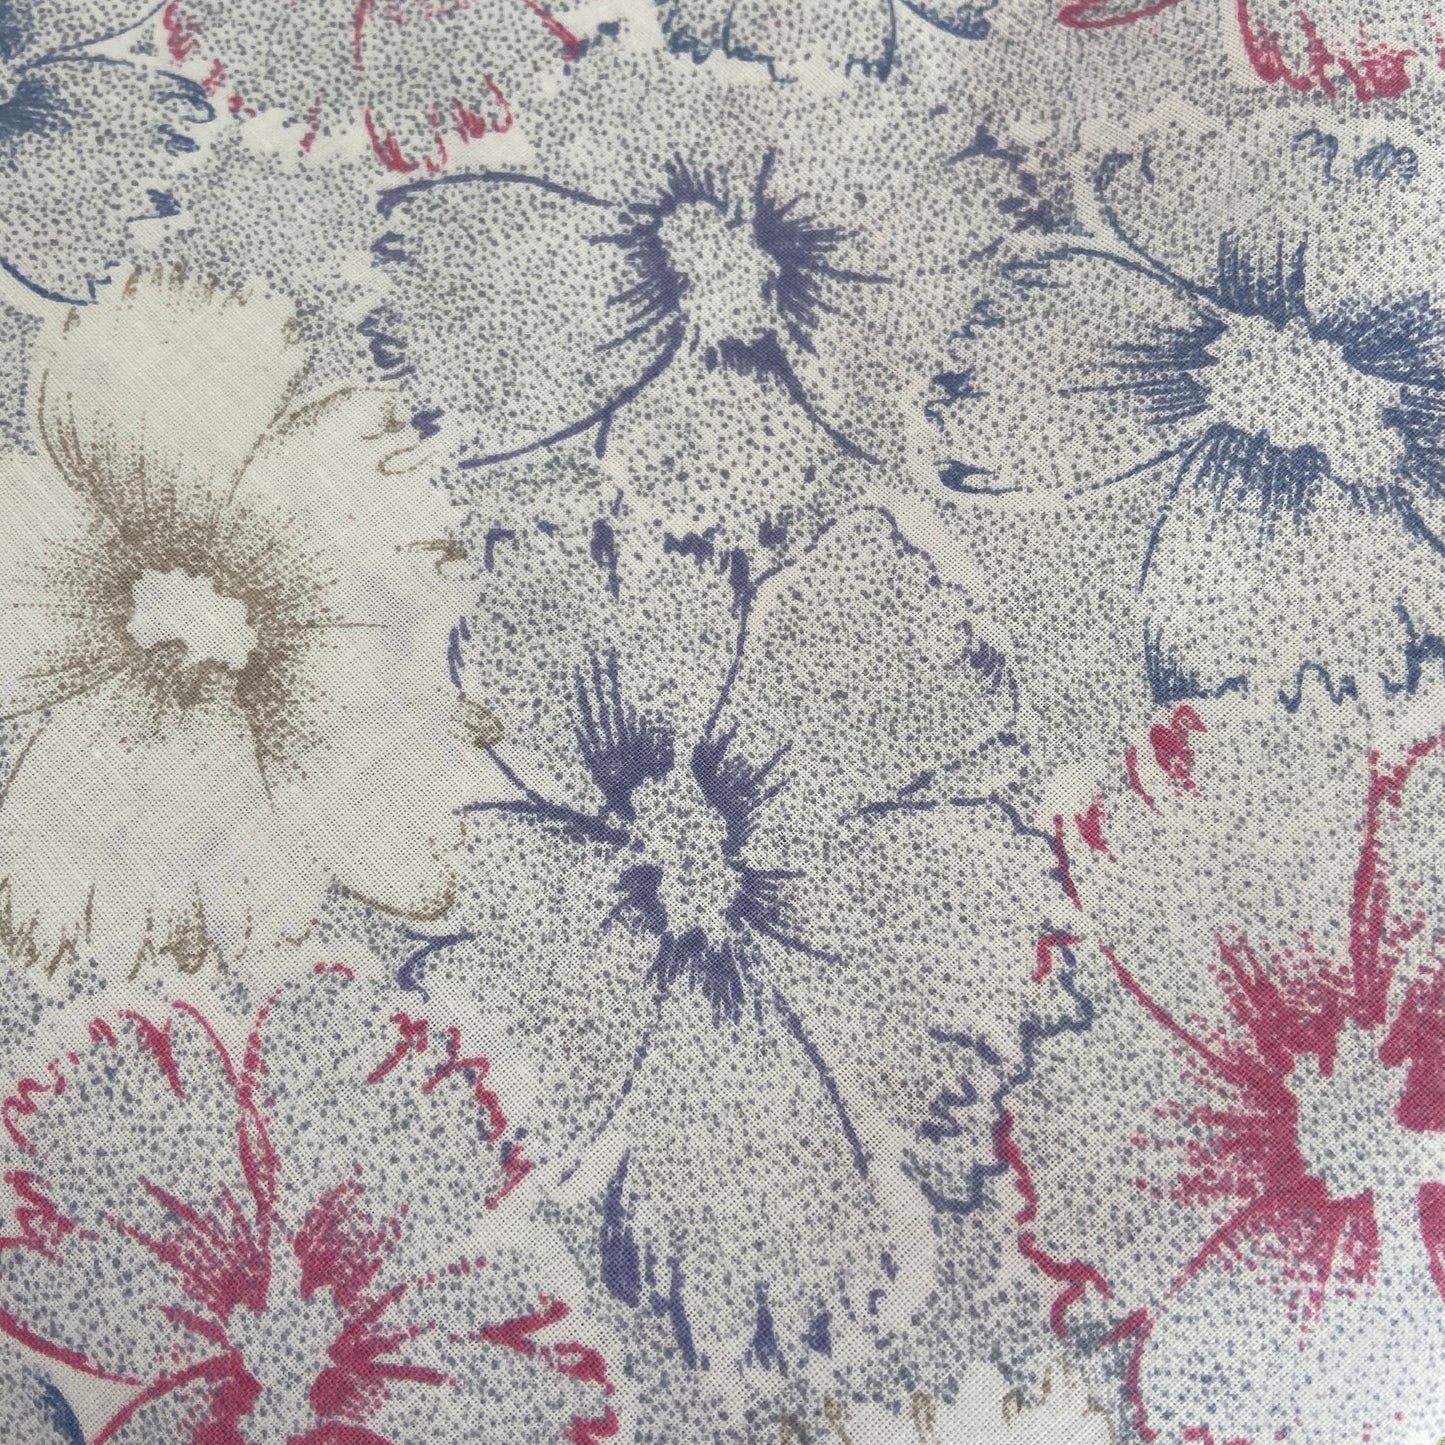 THREE Cotton Vintage Sheets (one UNUSED) Floral